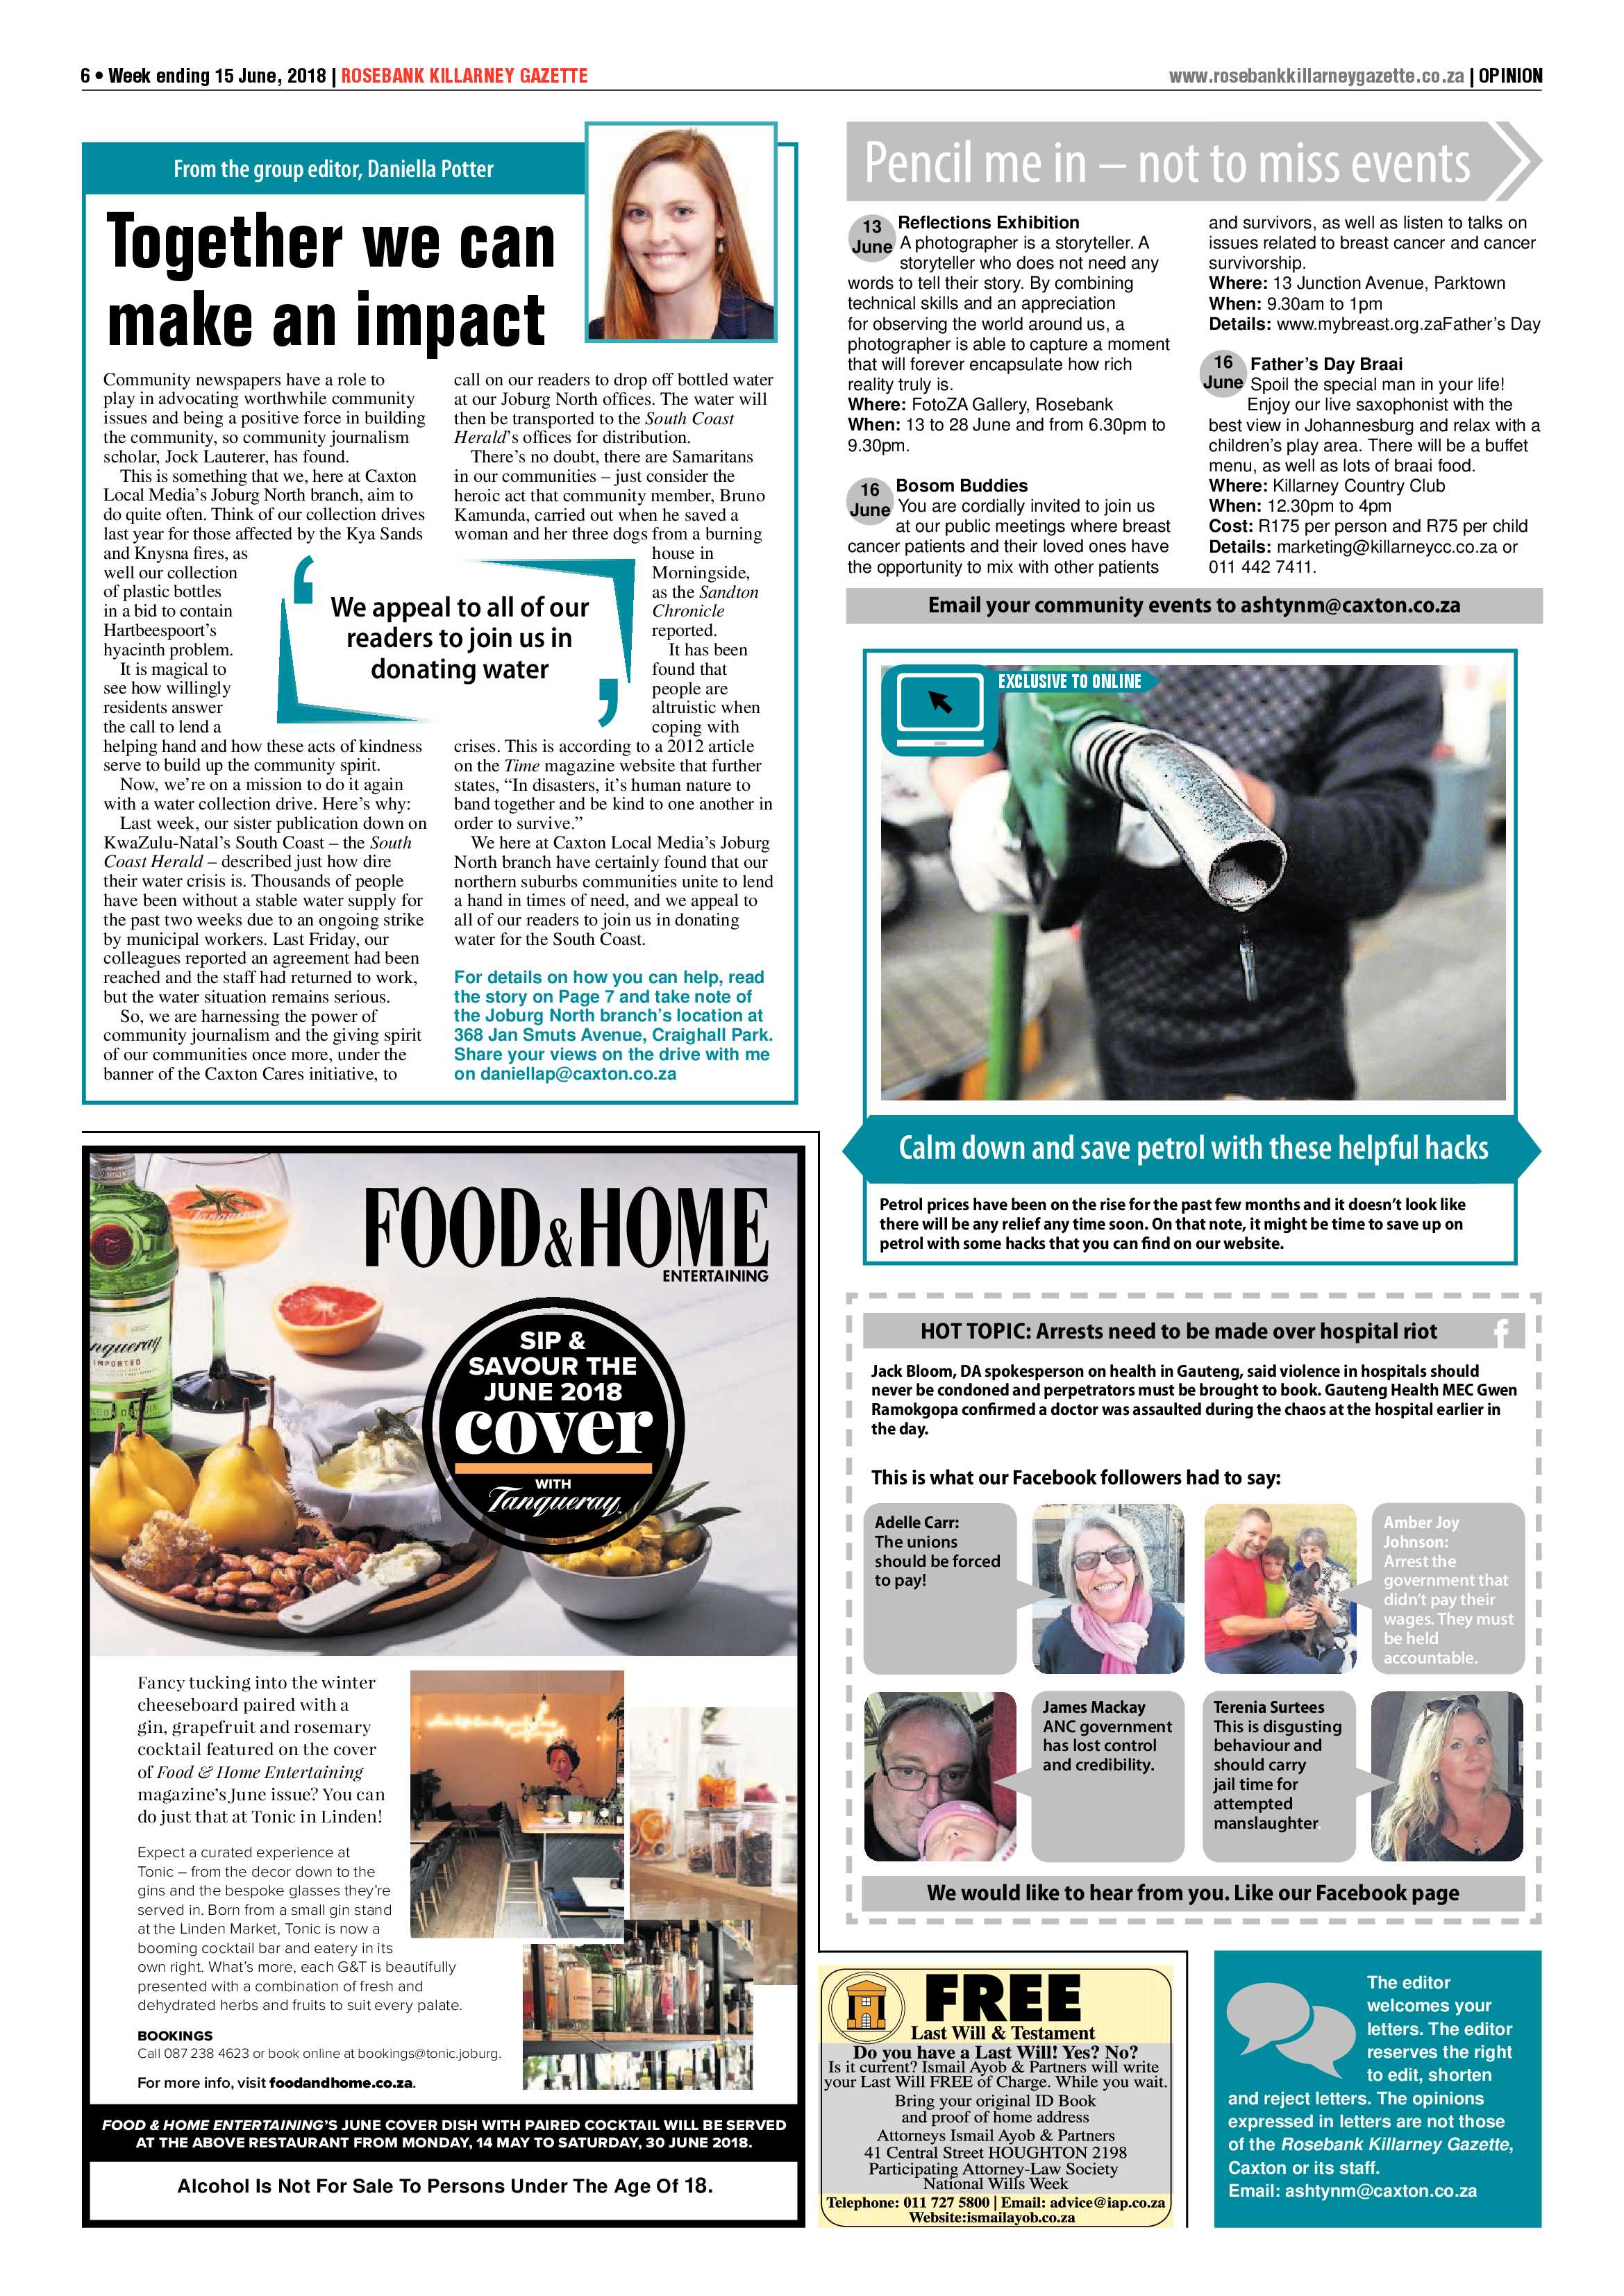 Rosebank Killarney Gazette 15 June 2018 page 6